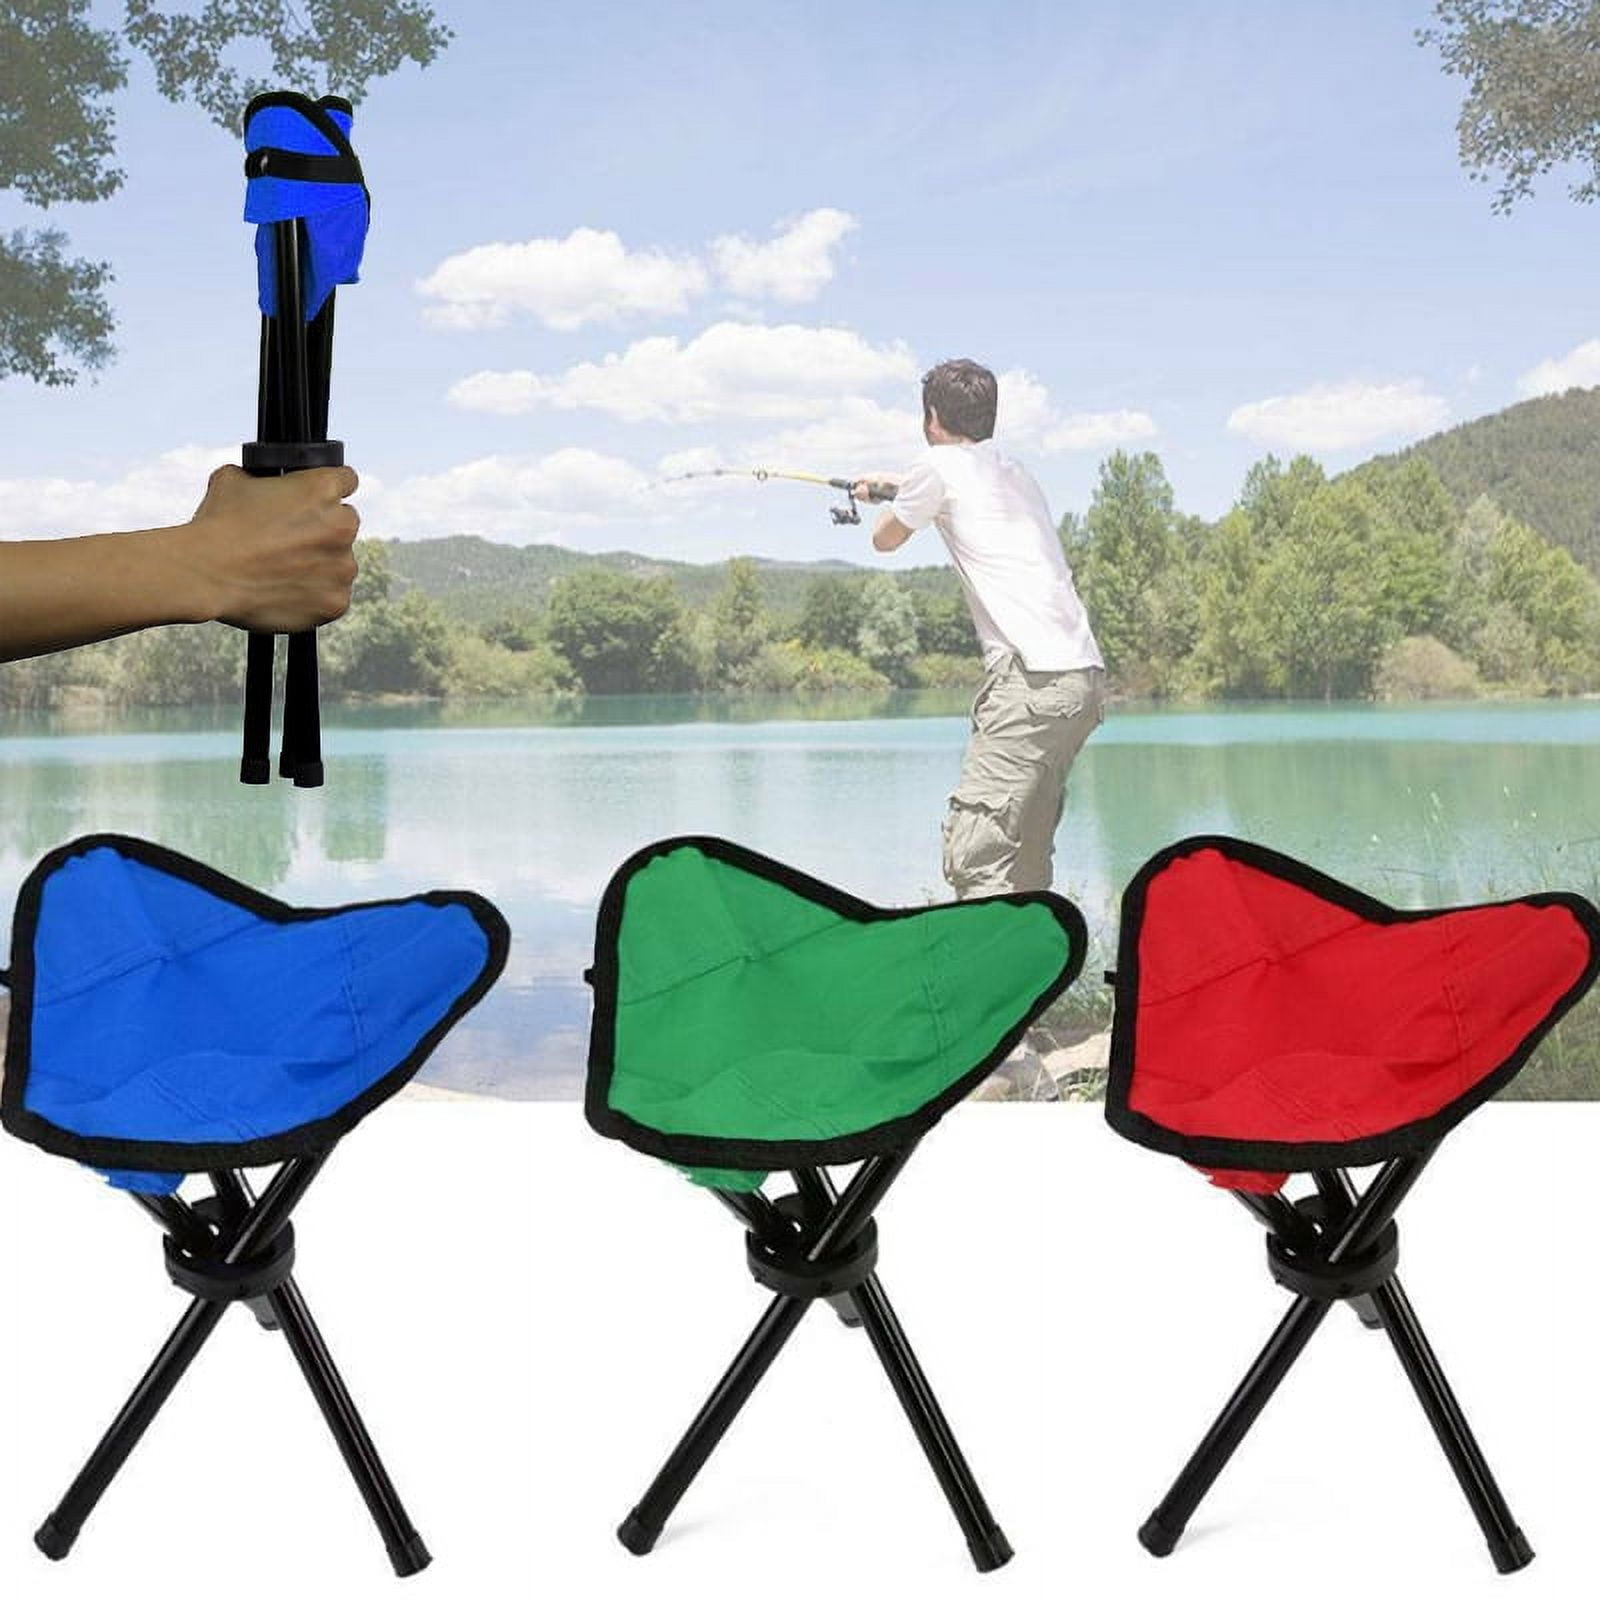 Baumaty Folding Stool Camping, Portable 3 Legs Chair Tripod Seat